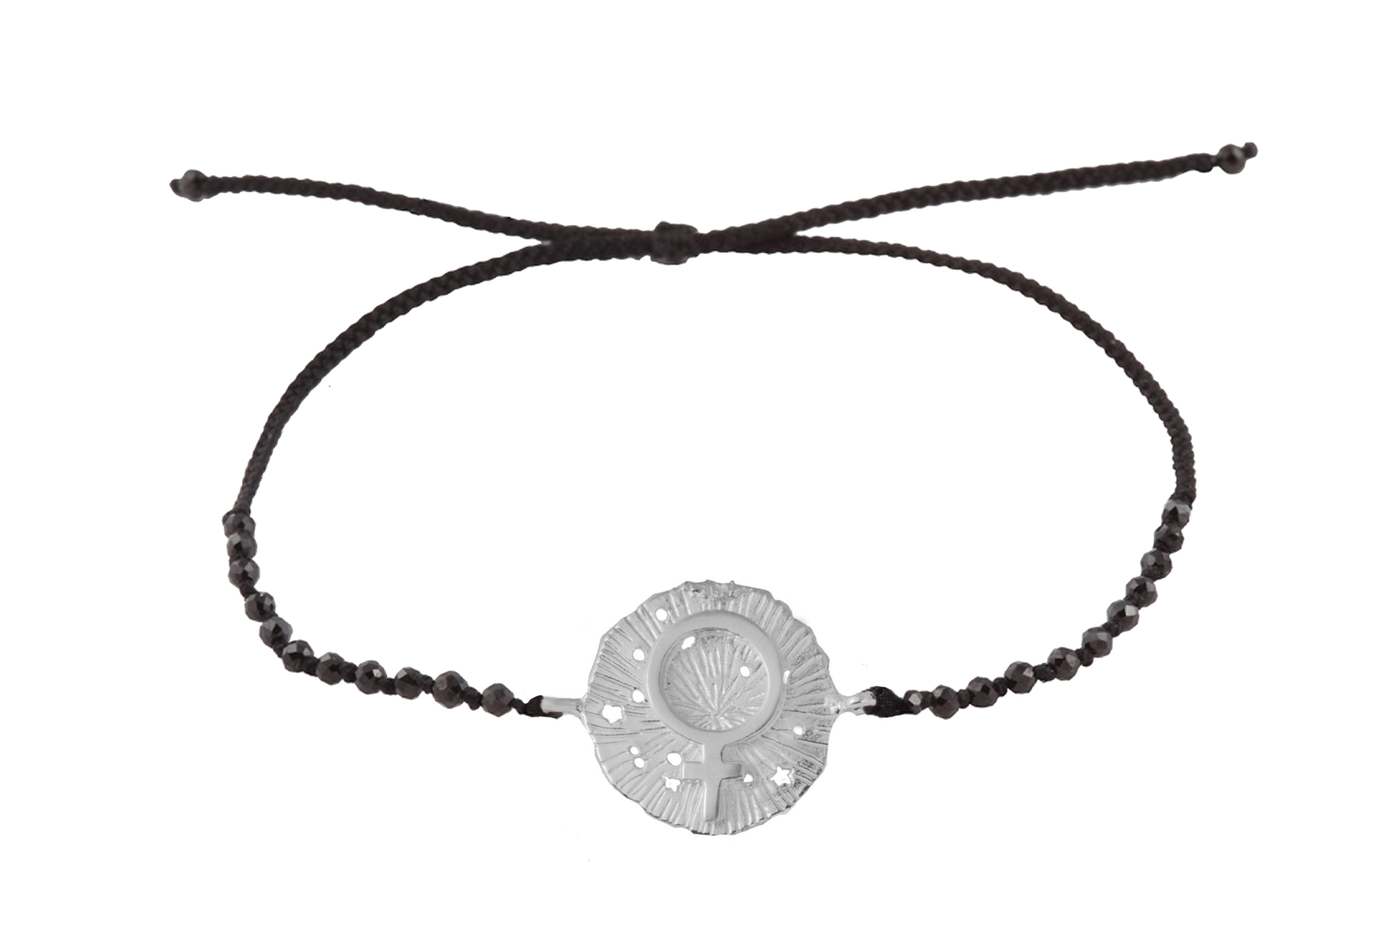 Venus medallion bracelet with semiprecious stone beads. Silver